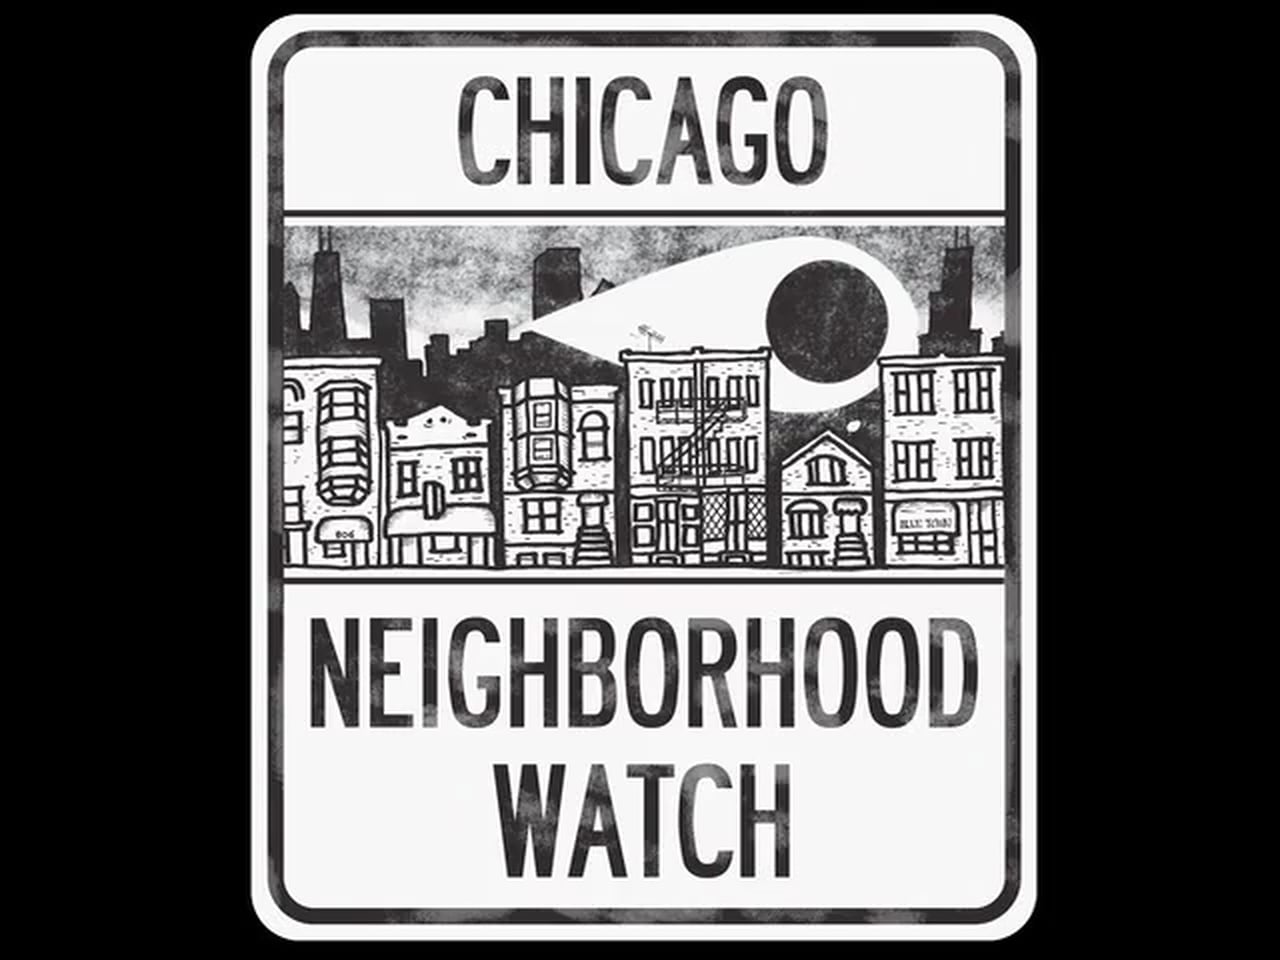 Chicago Neighborhood Watch cover